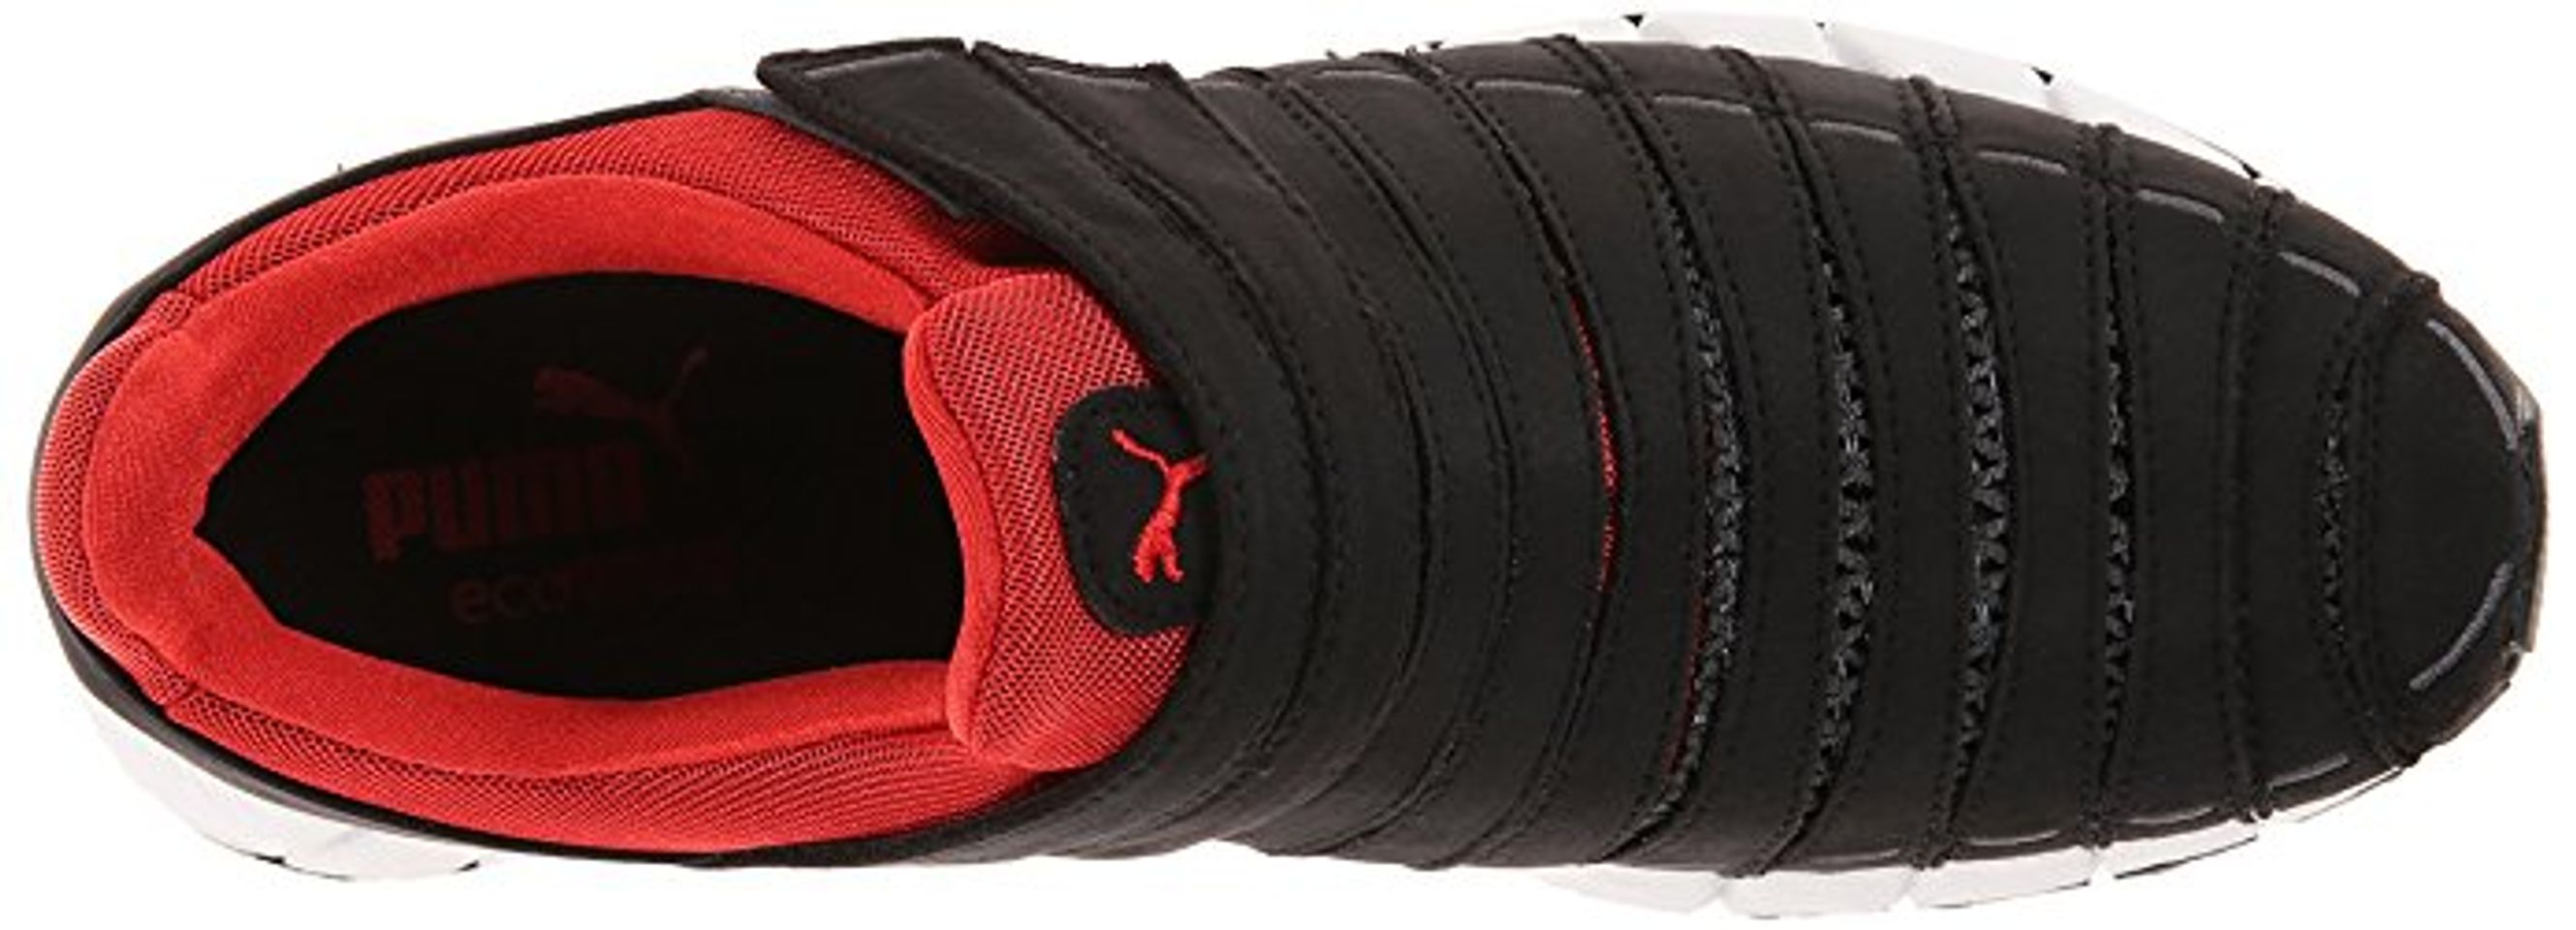 Giày thể thao nam Puma Osu NM màu Black/Dark Shadow/Red 5